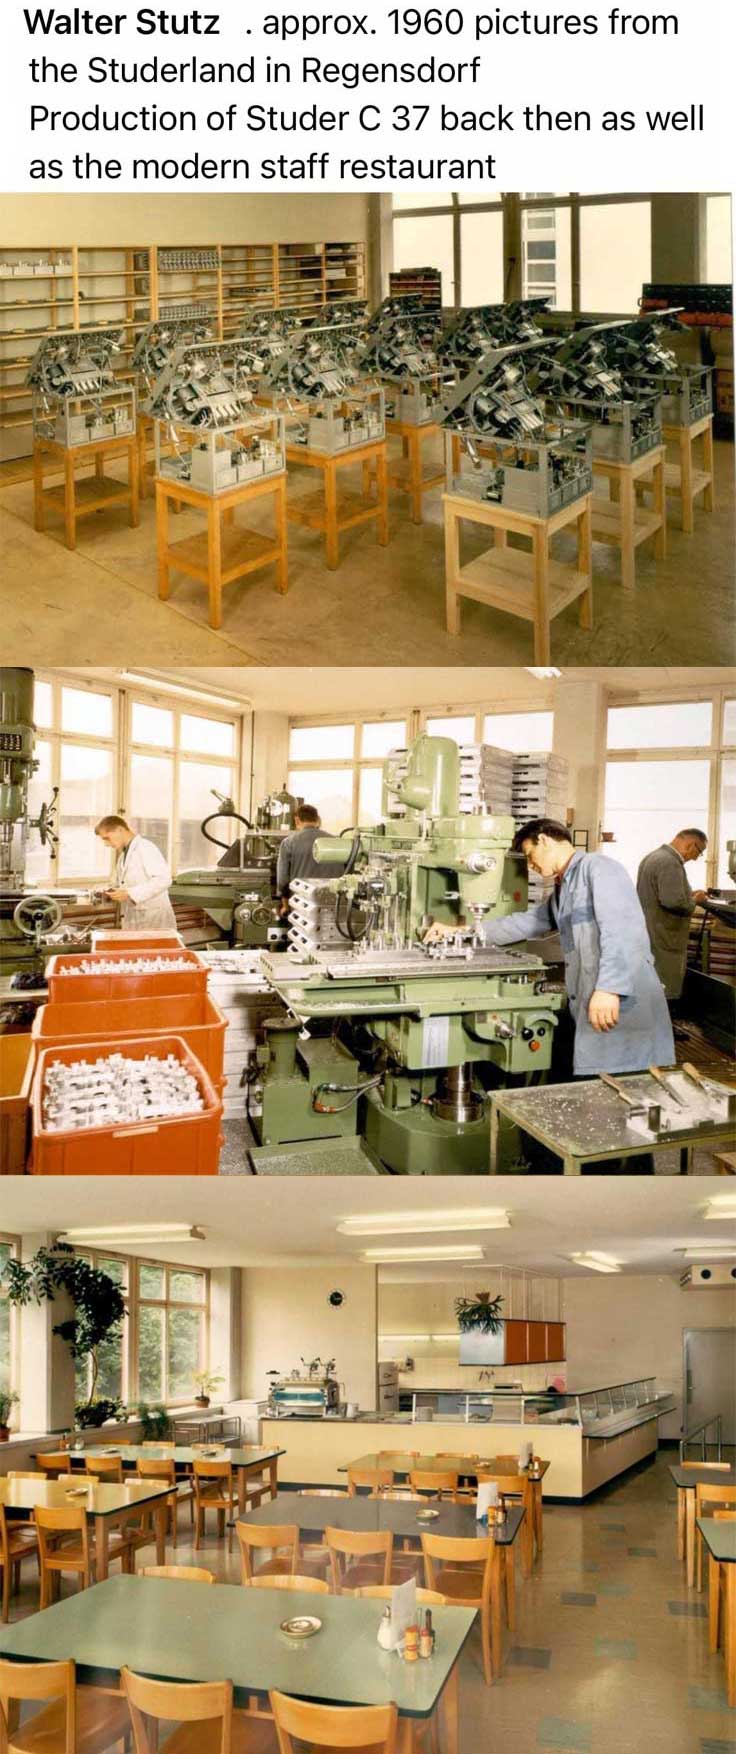 1960 Studer C 37factory in Regensdorf Germany